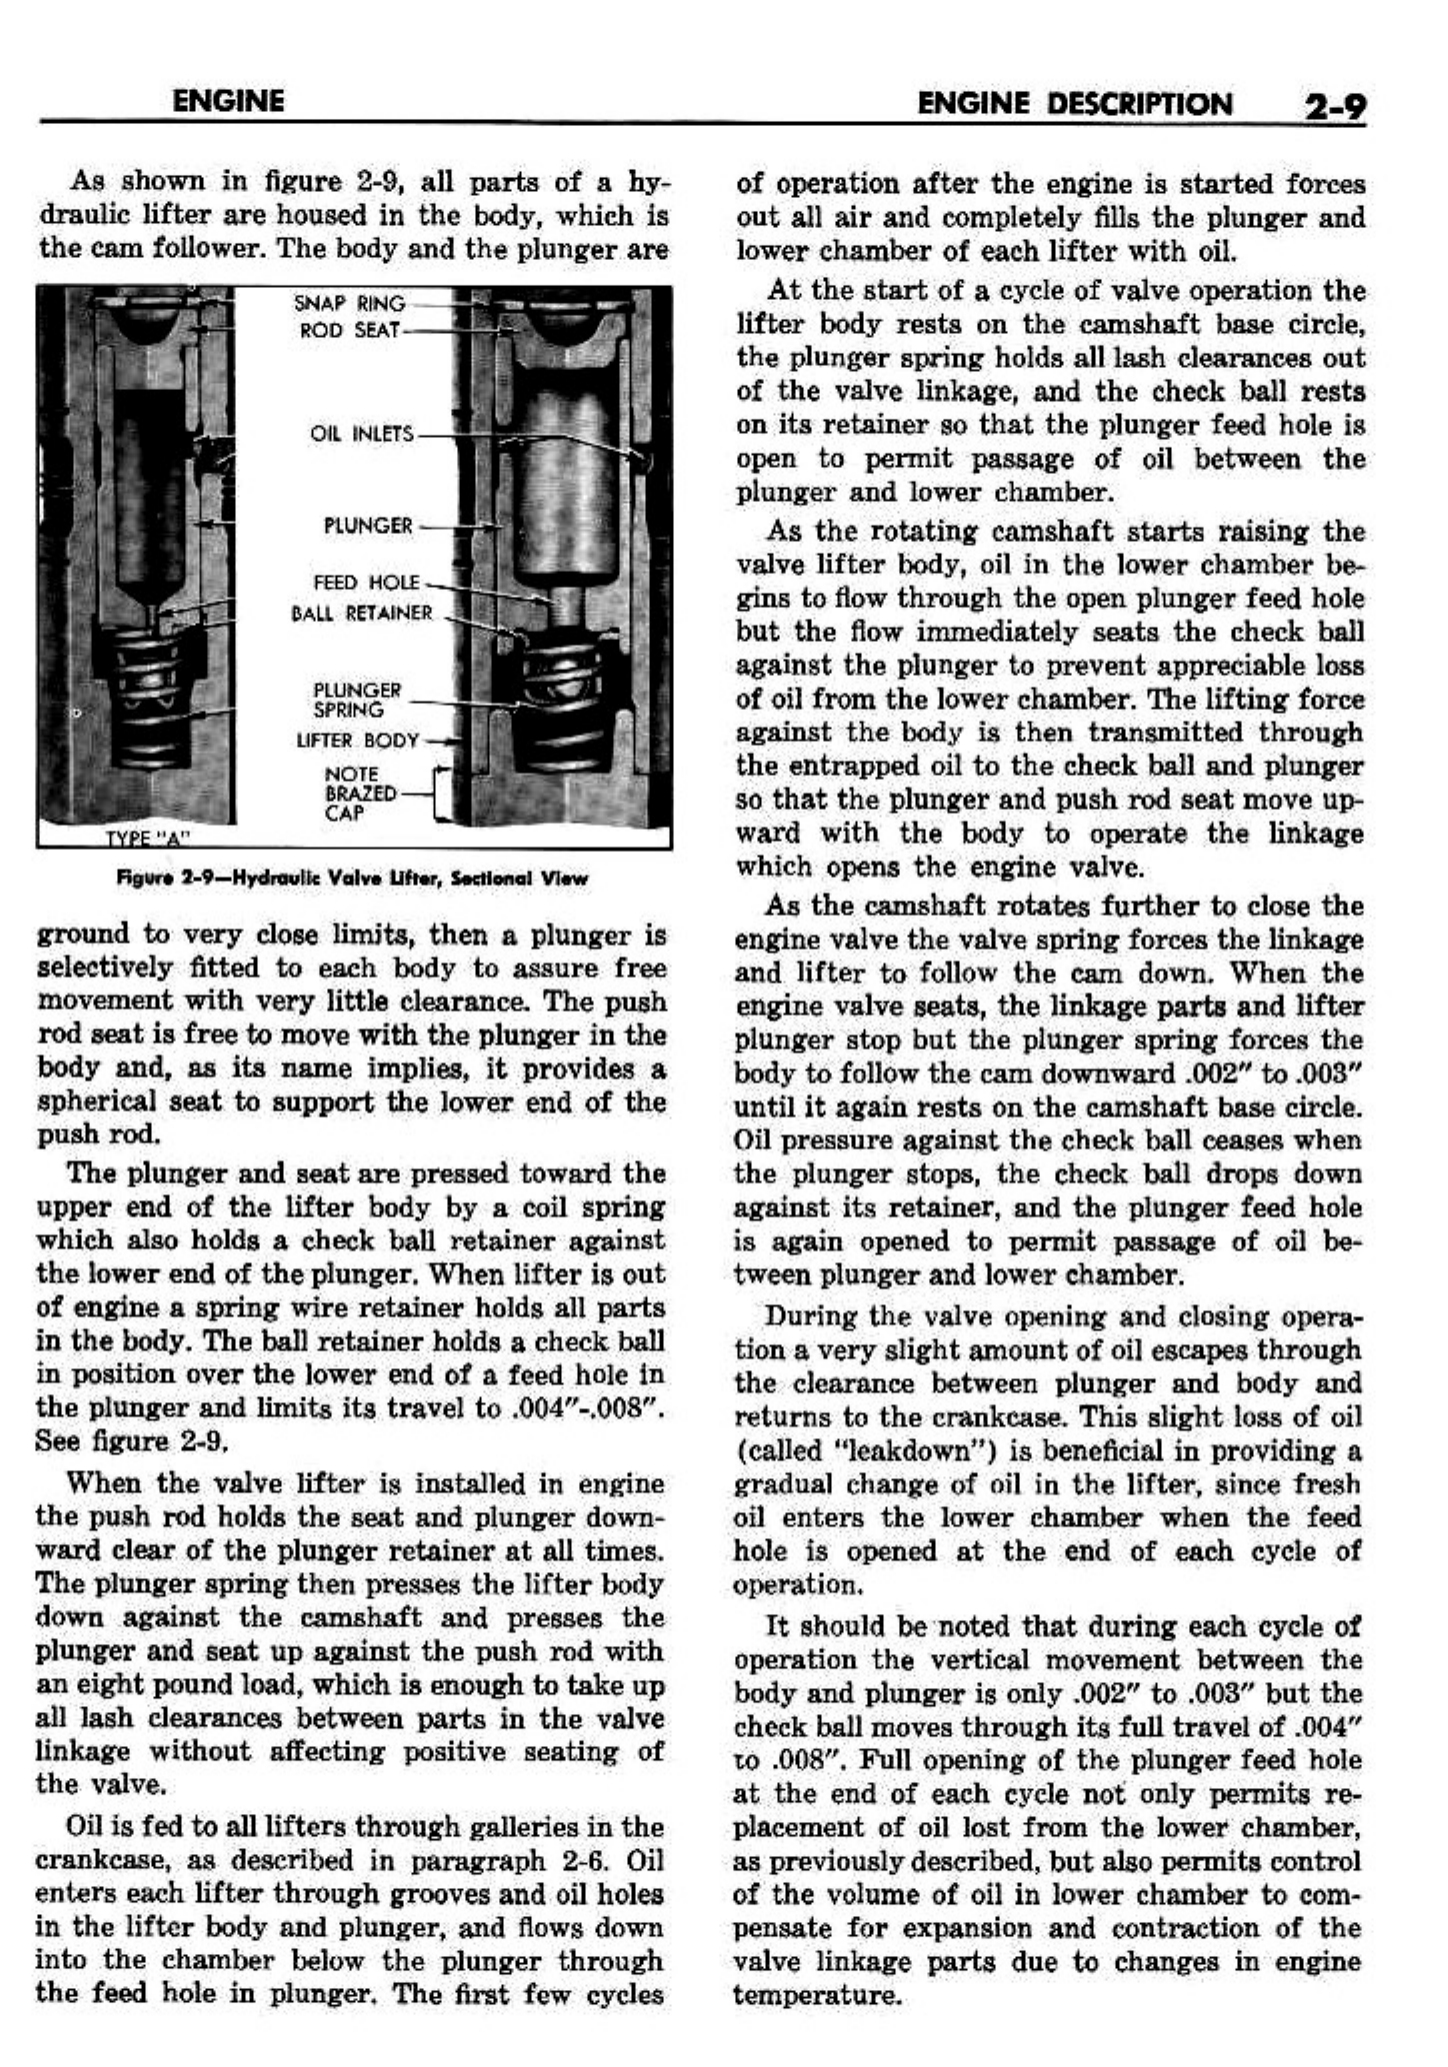 n_03 1958 Buick Shop Manual - Engine_9.jpg